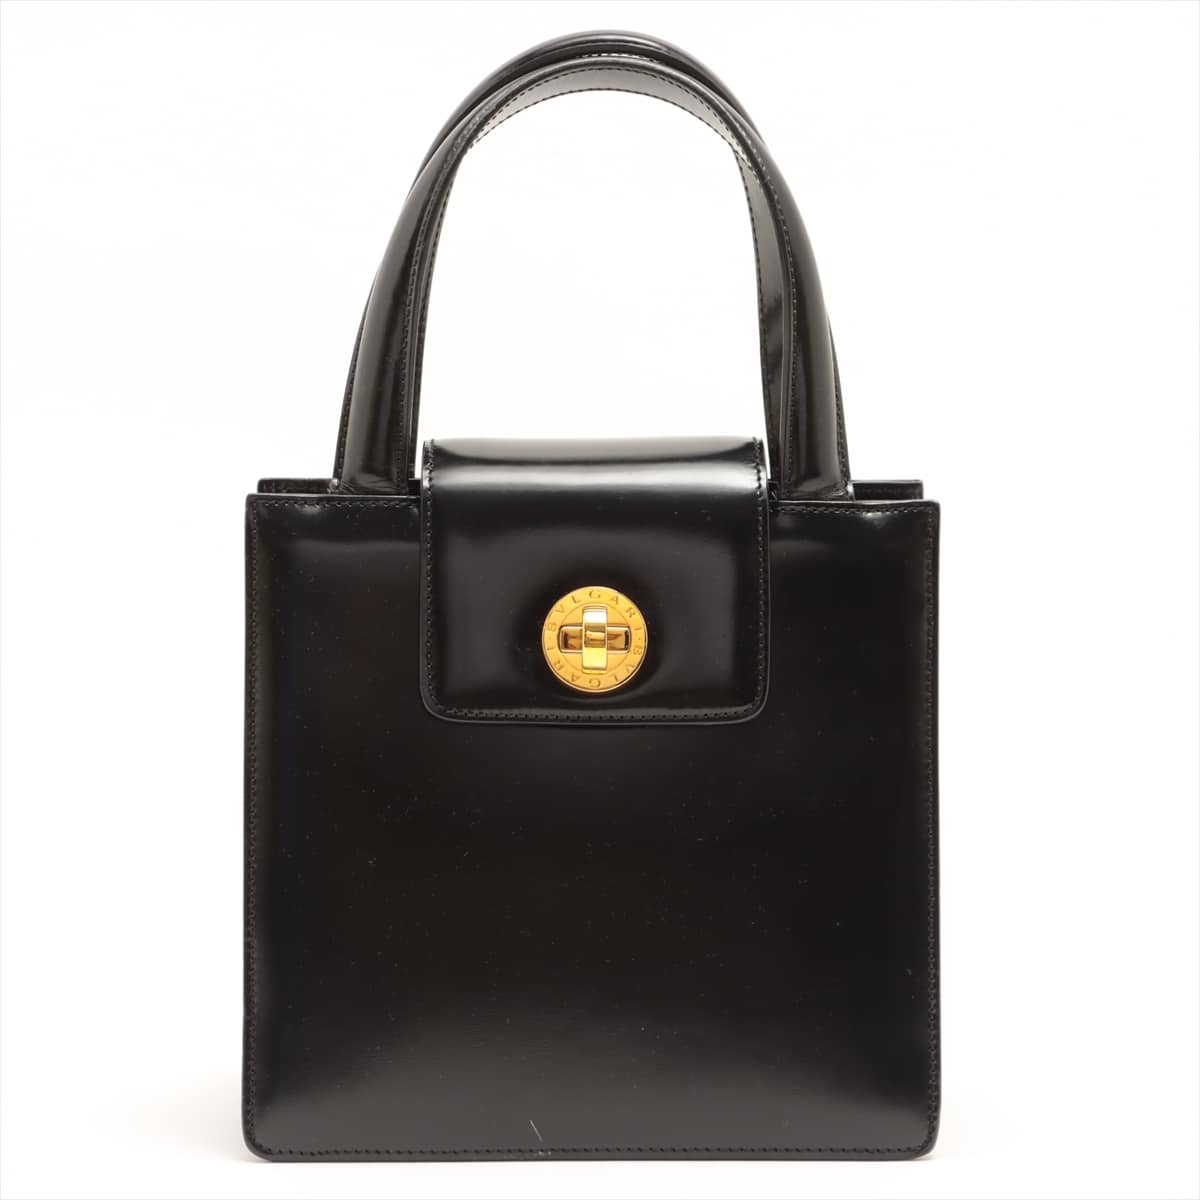 Bvlgari Bvlgari Bvlgari Leather 2way handbag Black